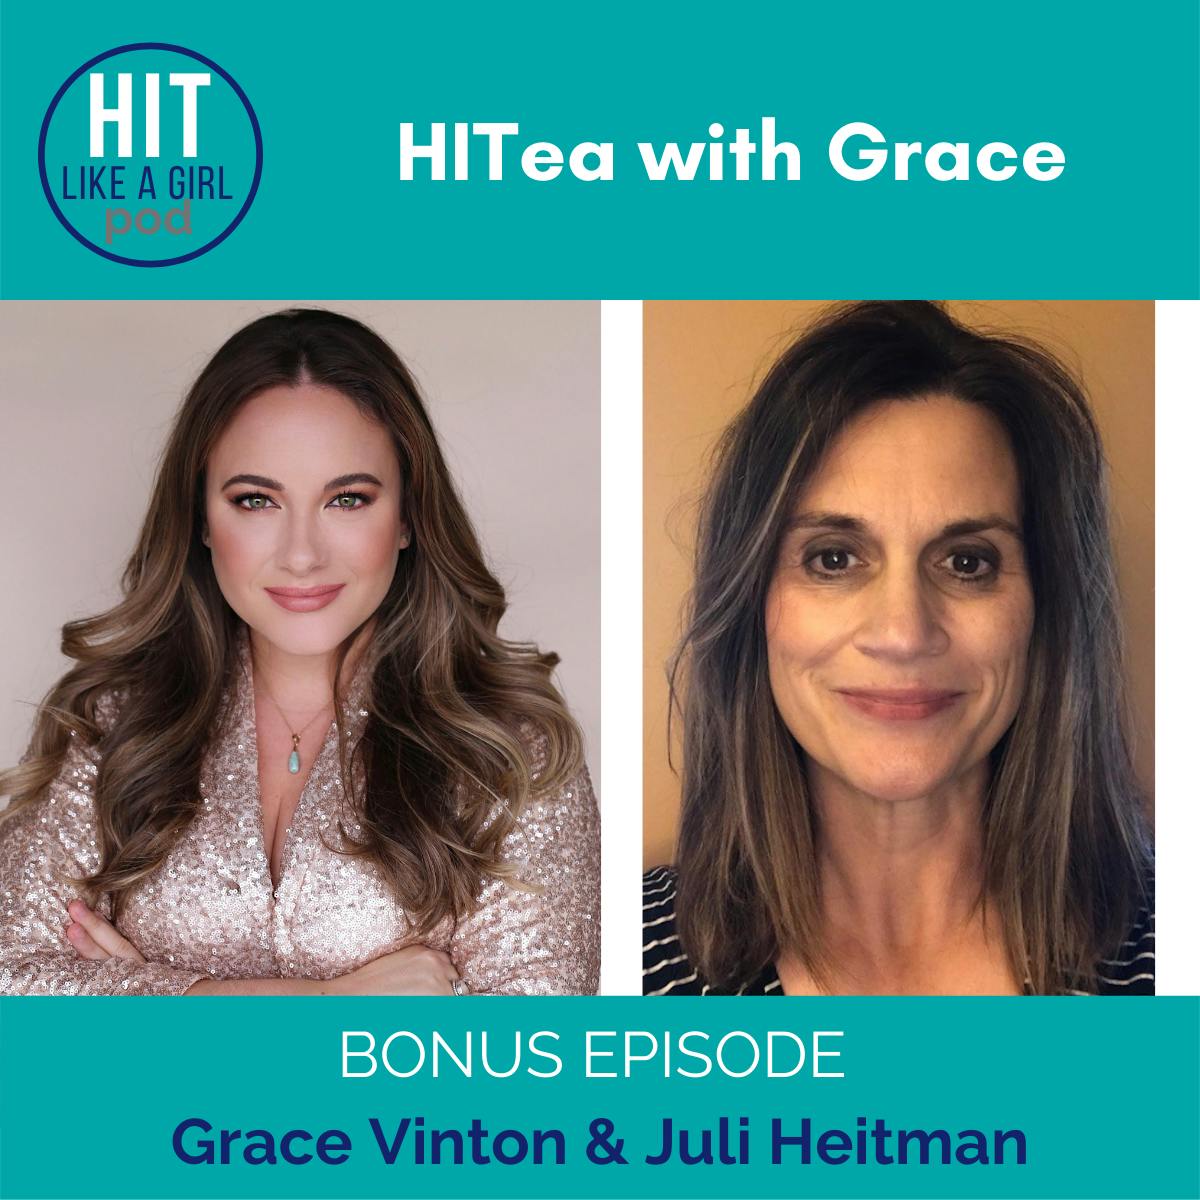 HITea with Grace: Grace Vinton interviews Juli Heitman